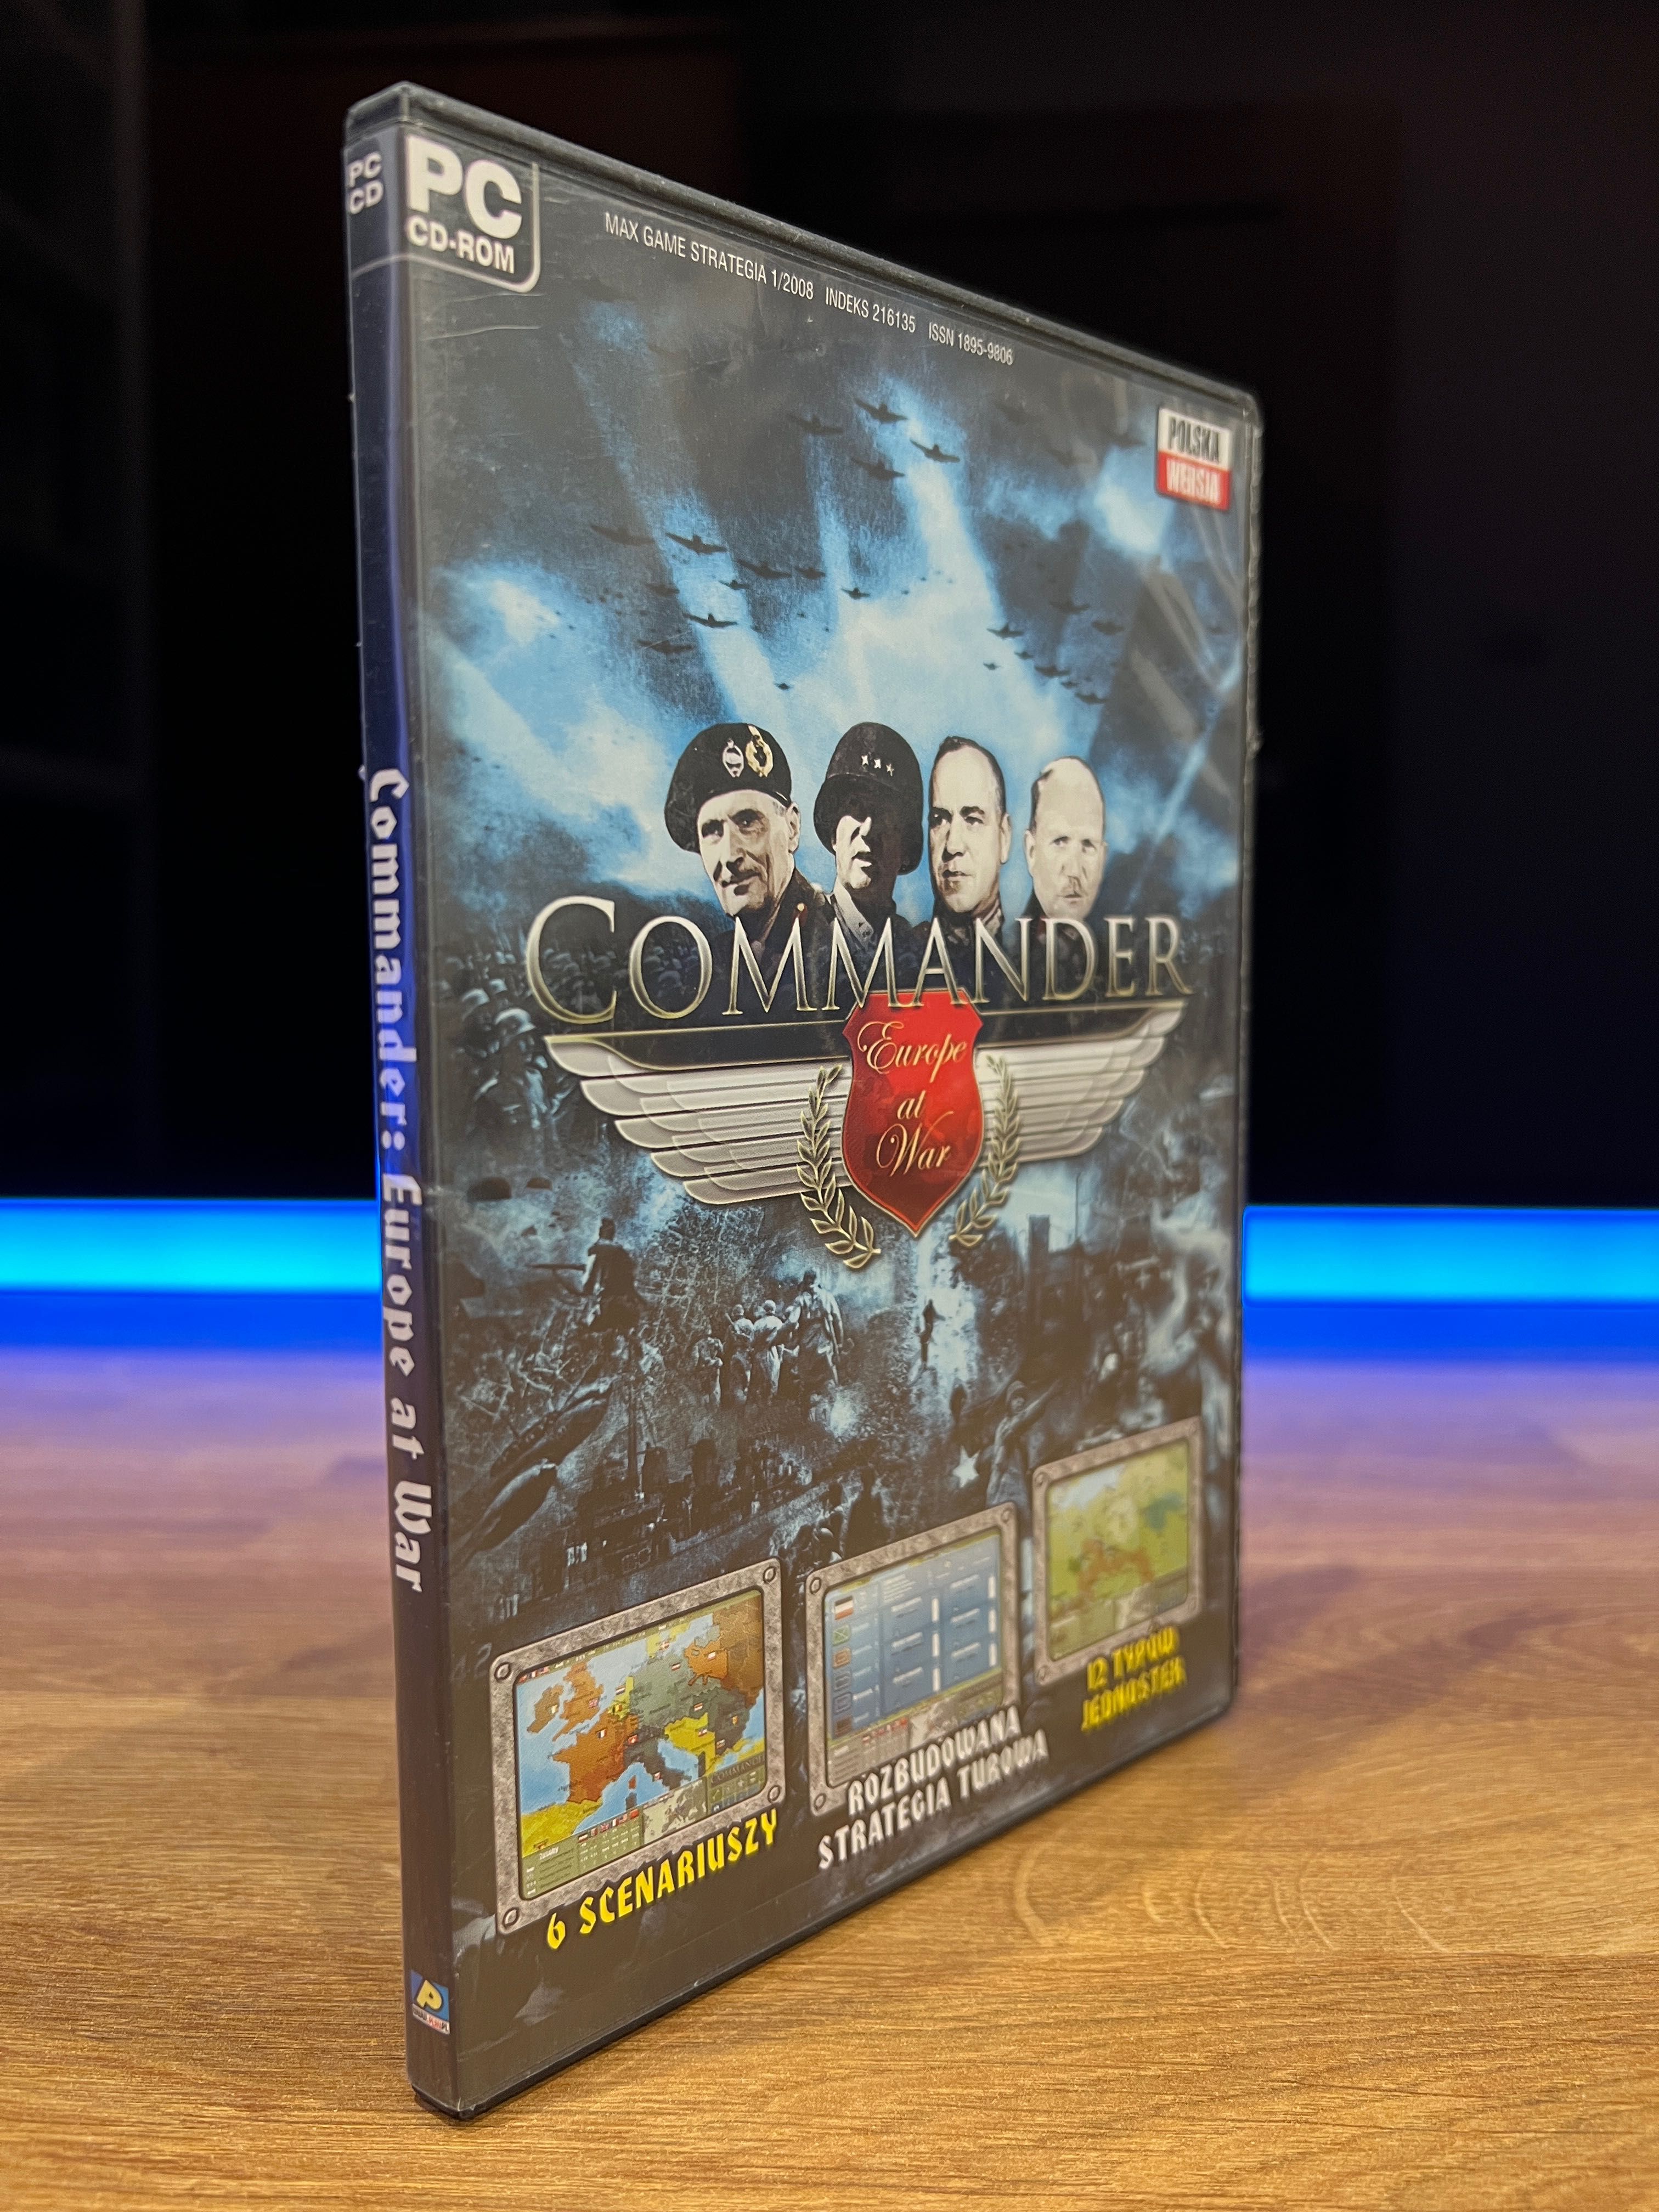 Commander Europe at War (PC PL 2008) kompletne premierowe wydanie